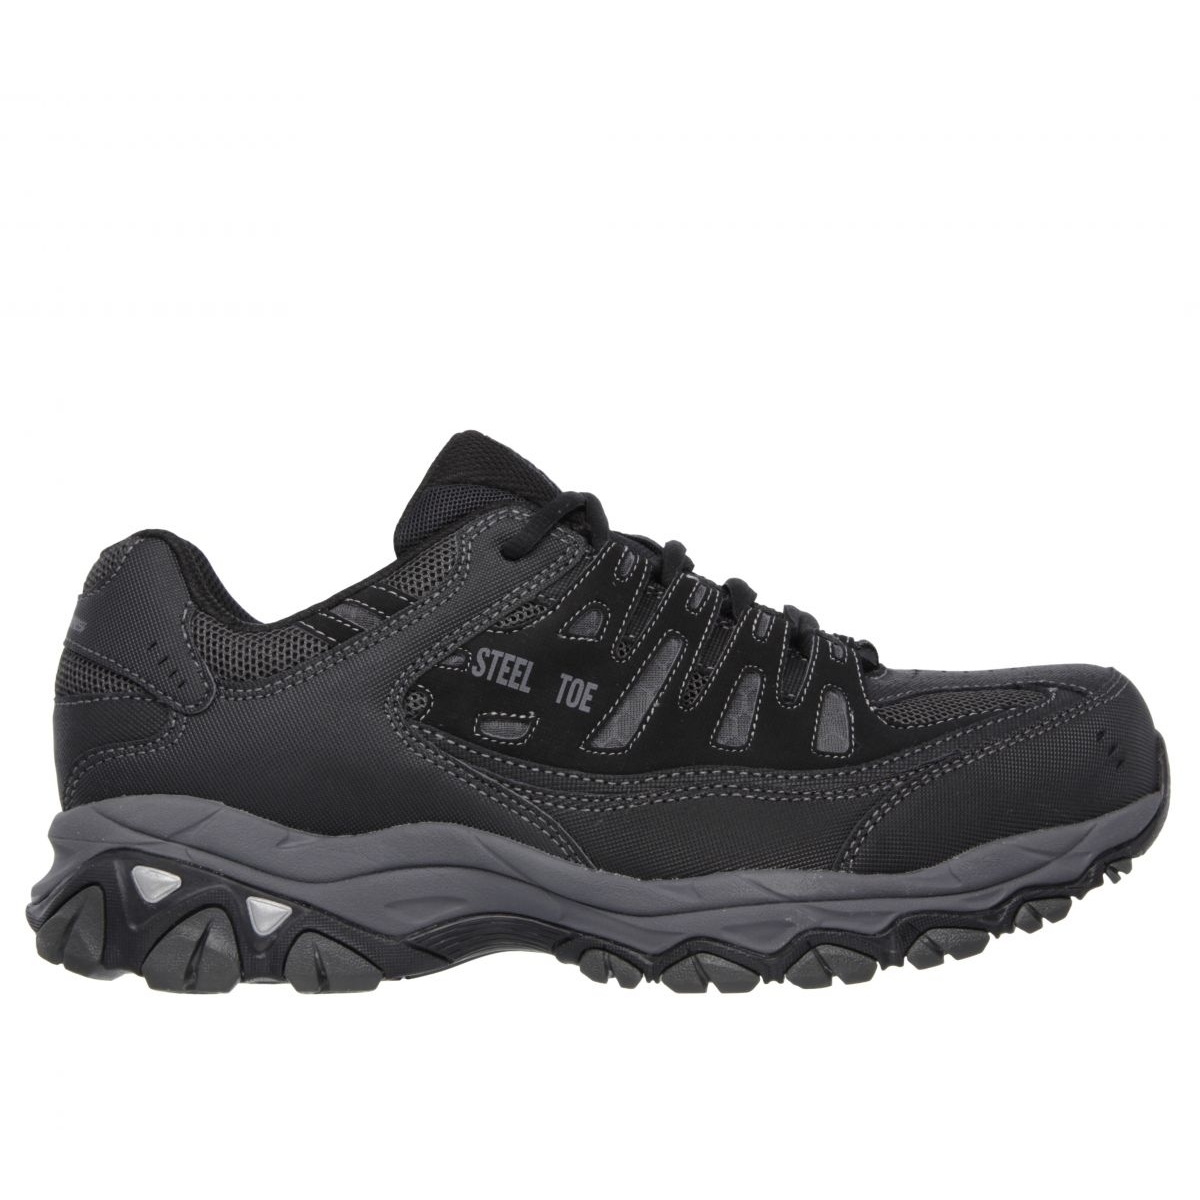 Skechers Men's Cankton-U Industrial Shoe 7 BLACK/CHARCOAL - BLACK/CHARCOAL, 10 Wide